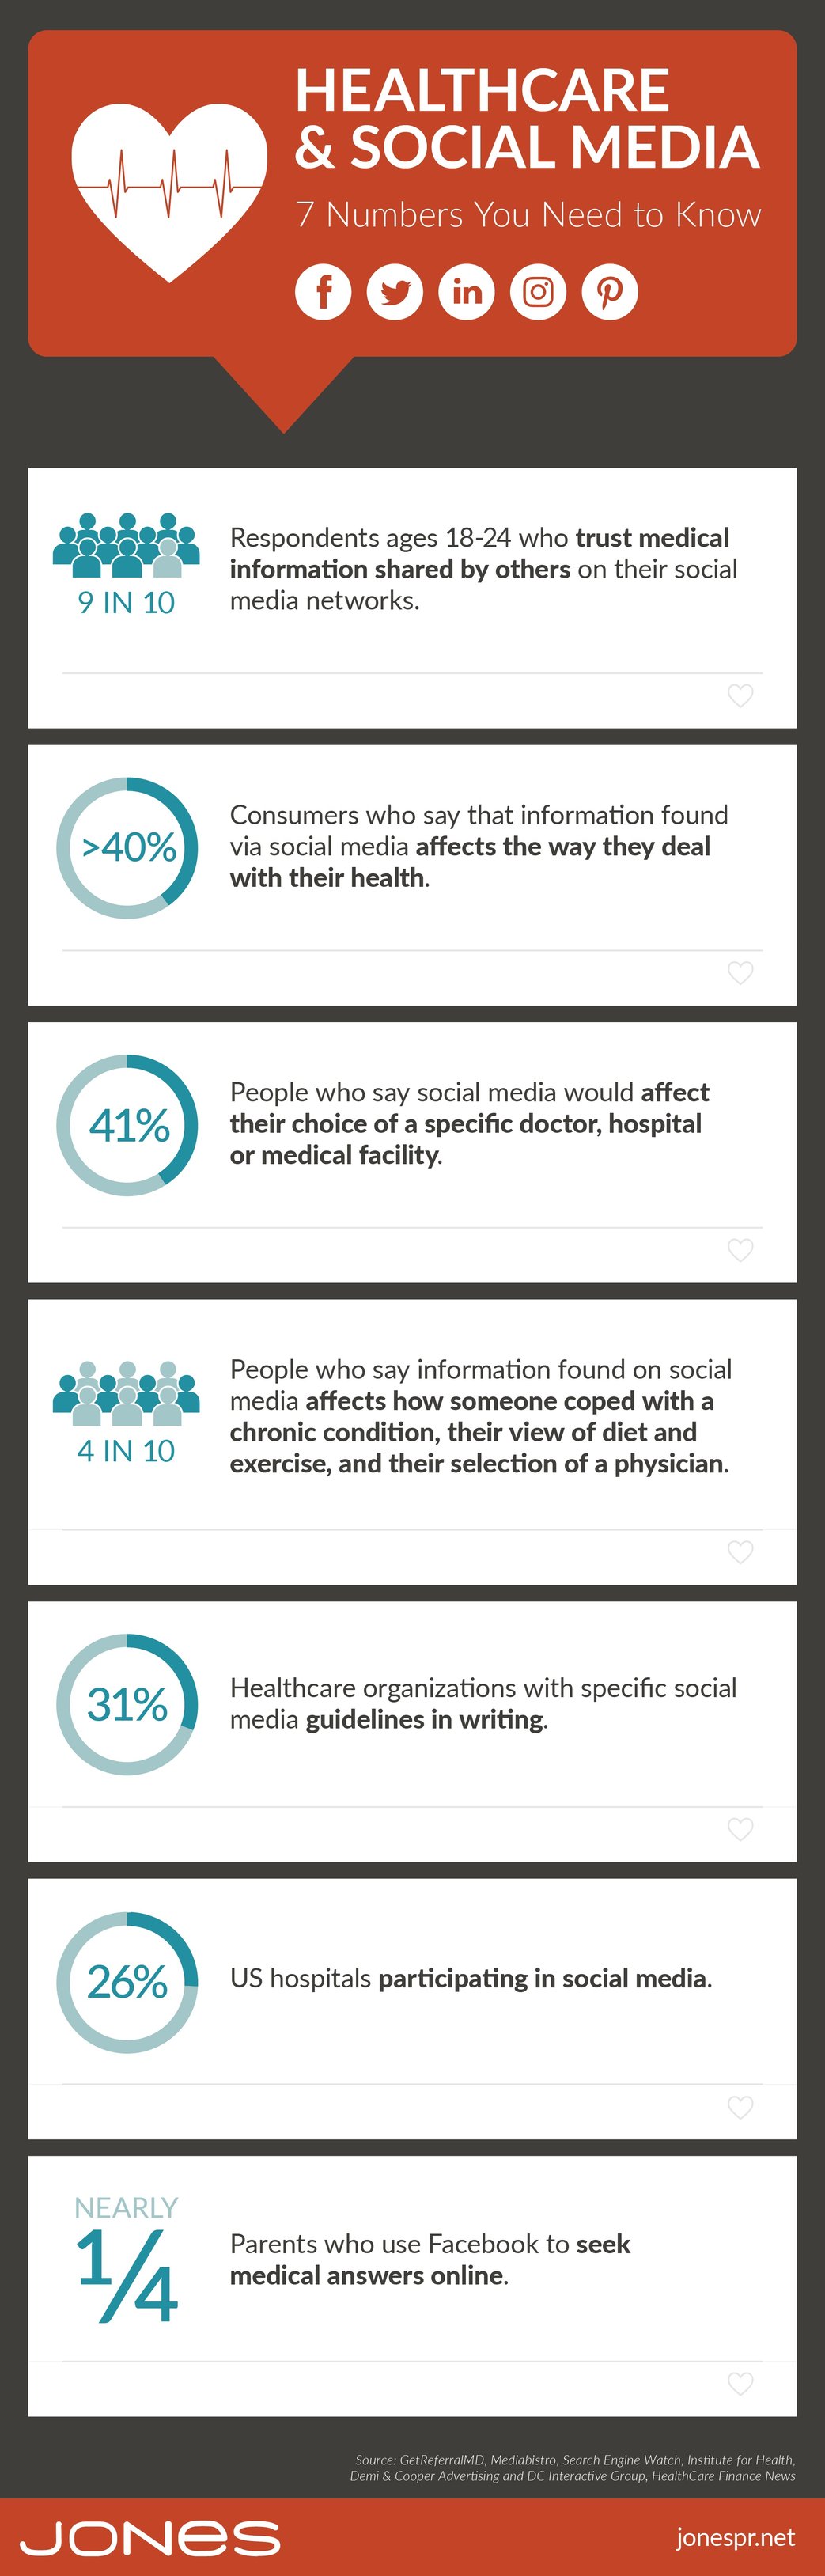 jones-infographic-healthcare-social-media-stats-3